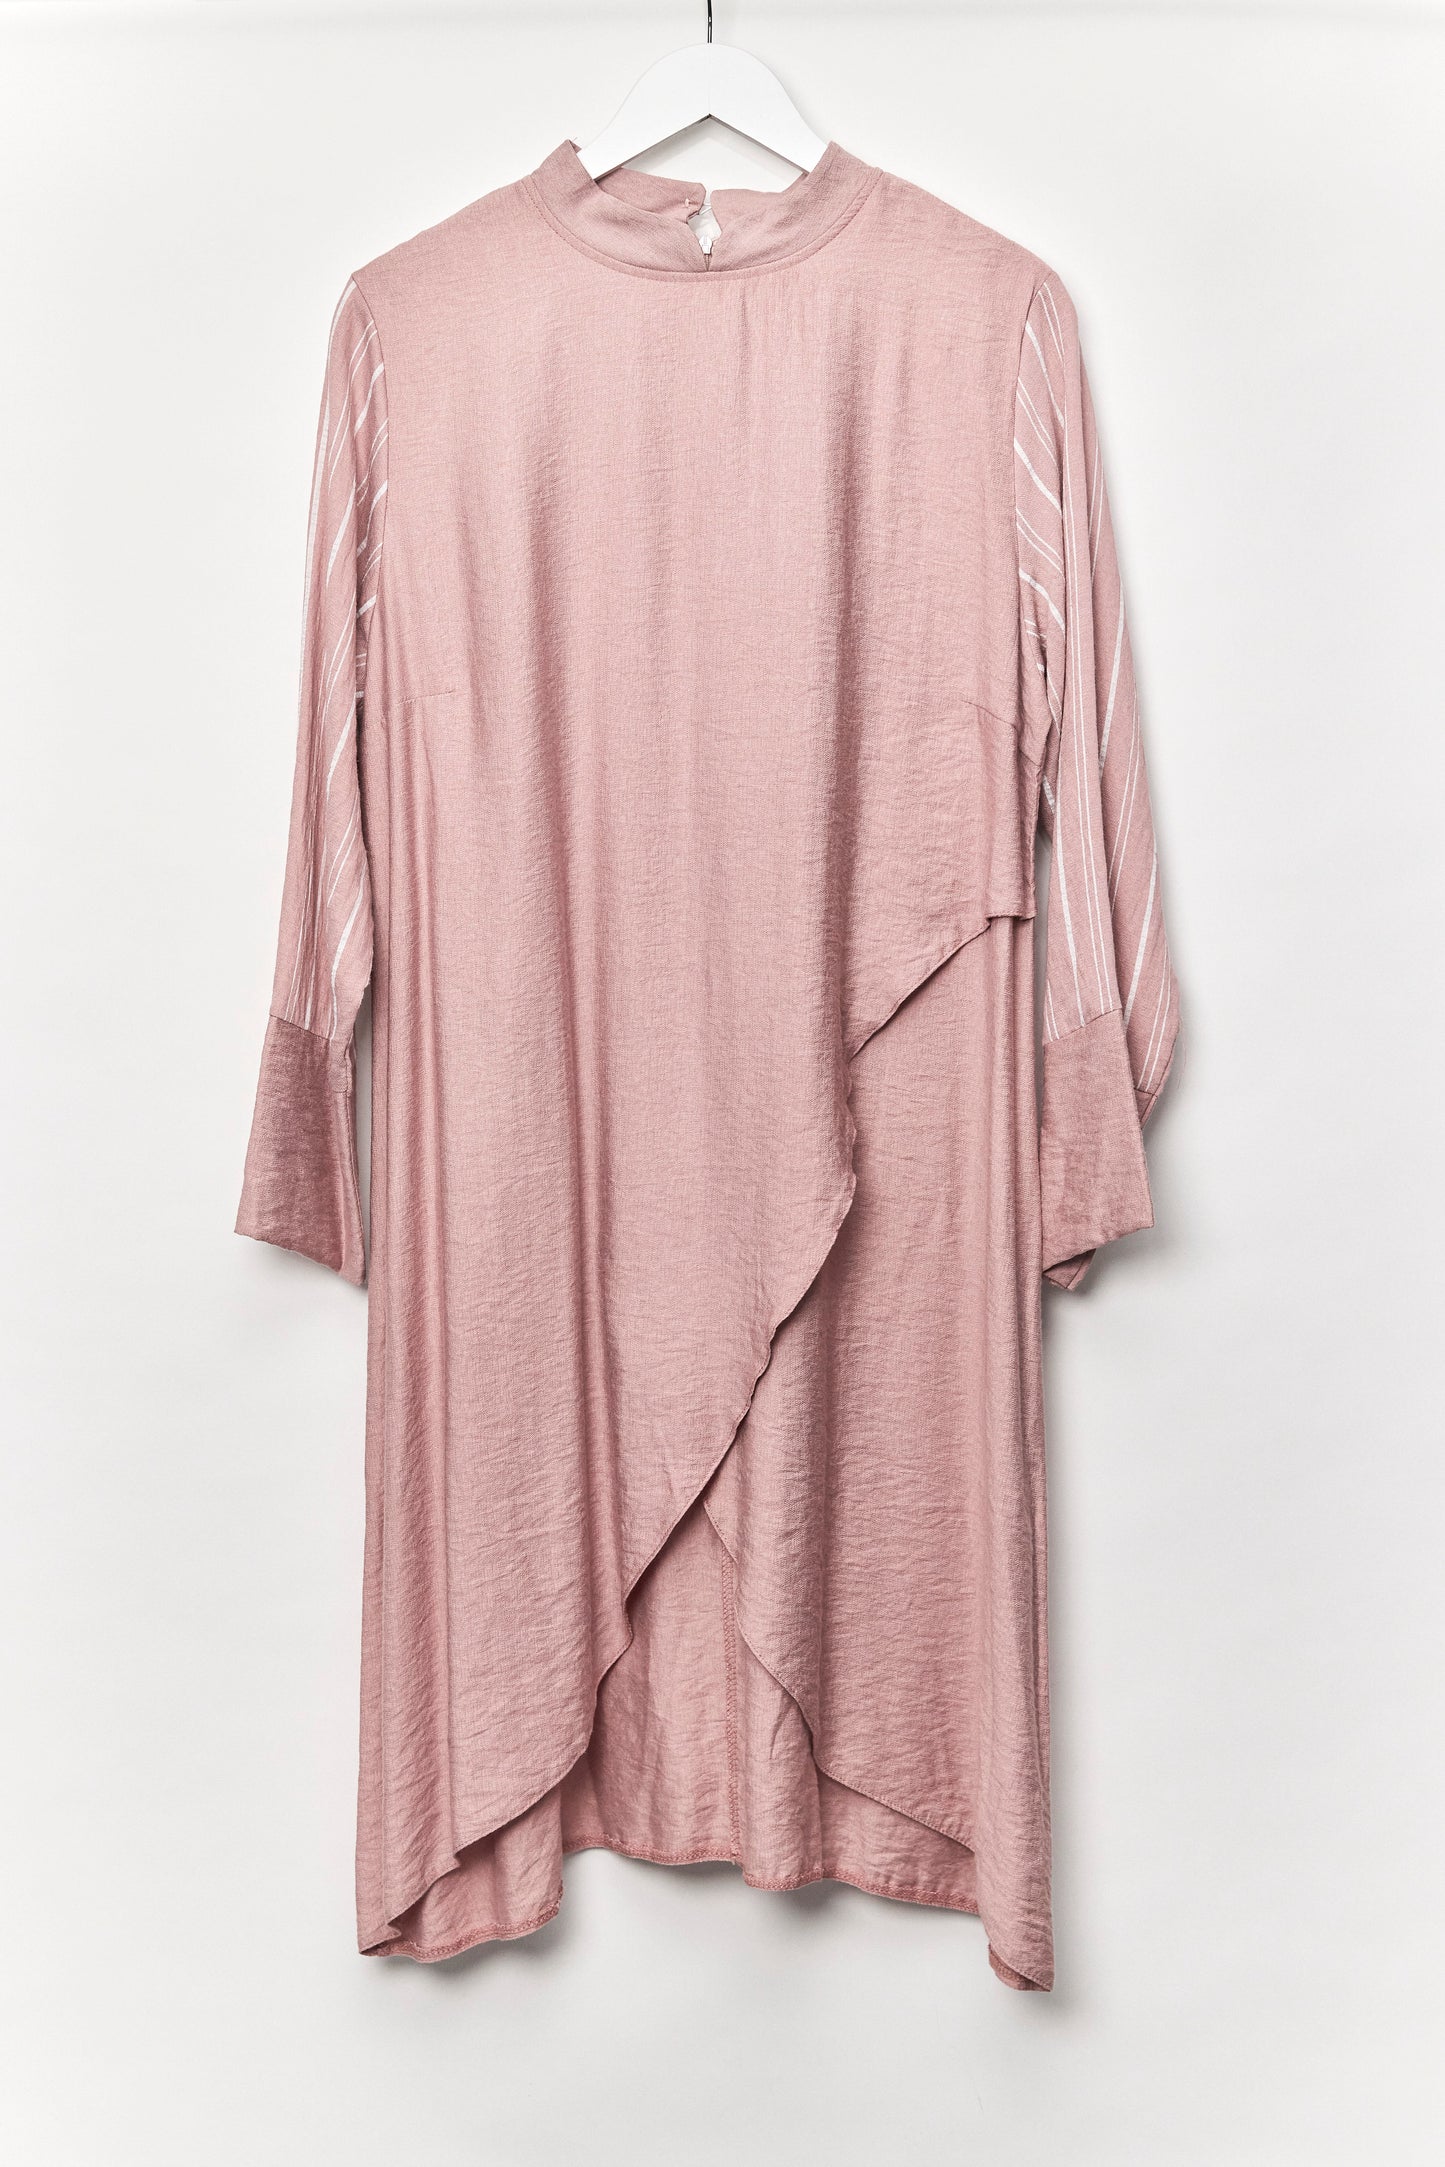 Womens pink modest wear midi dress size 12